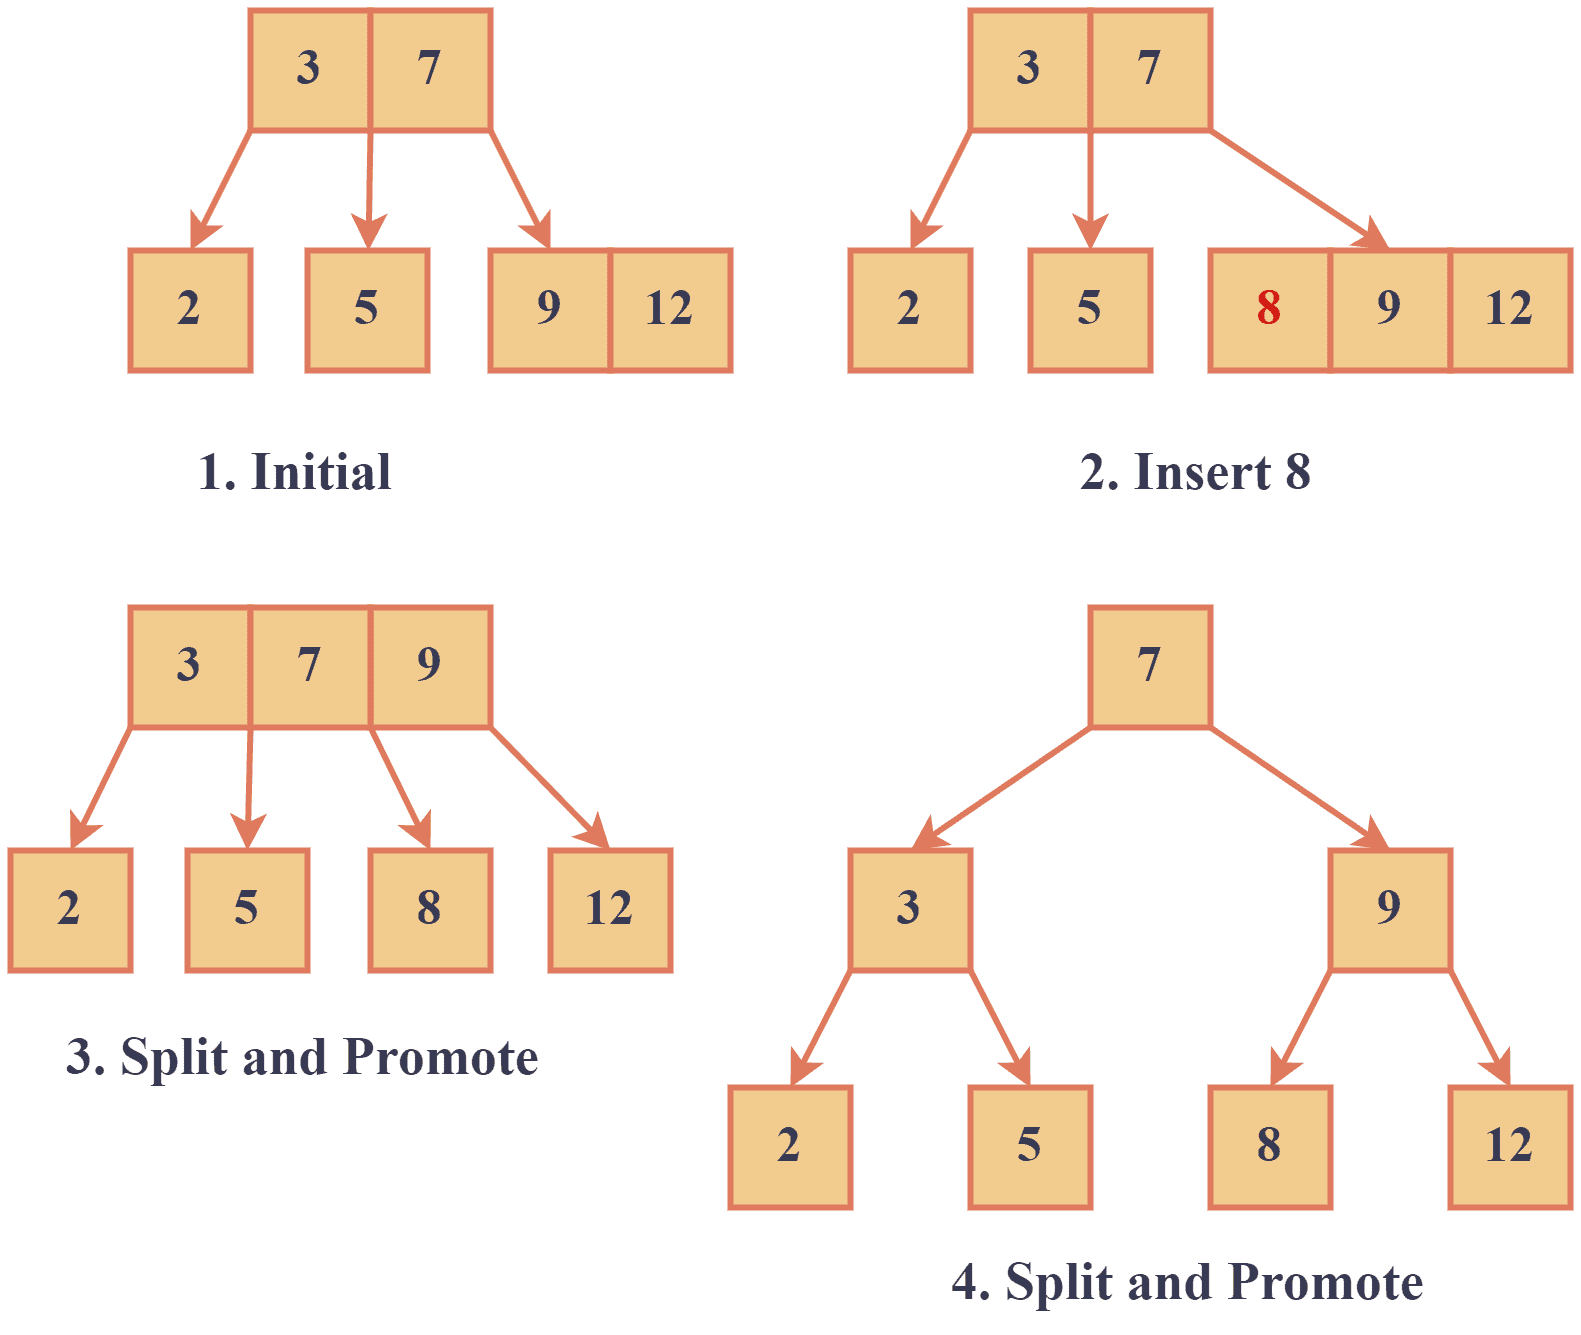 Insertion in Muti-way Search tree